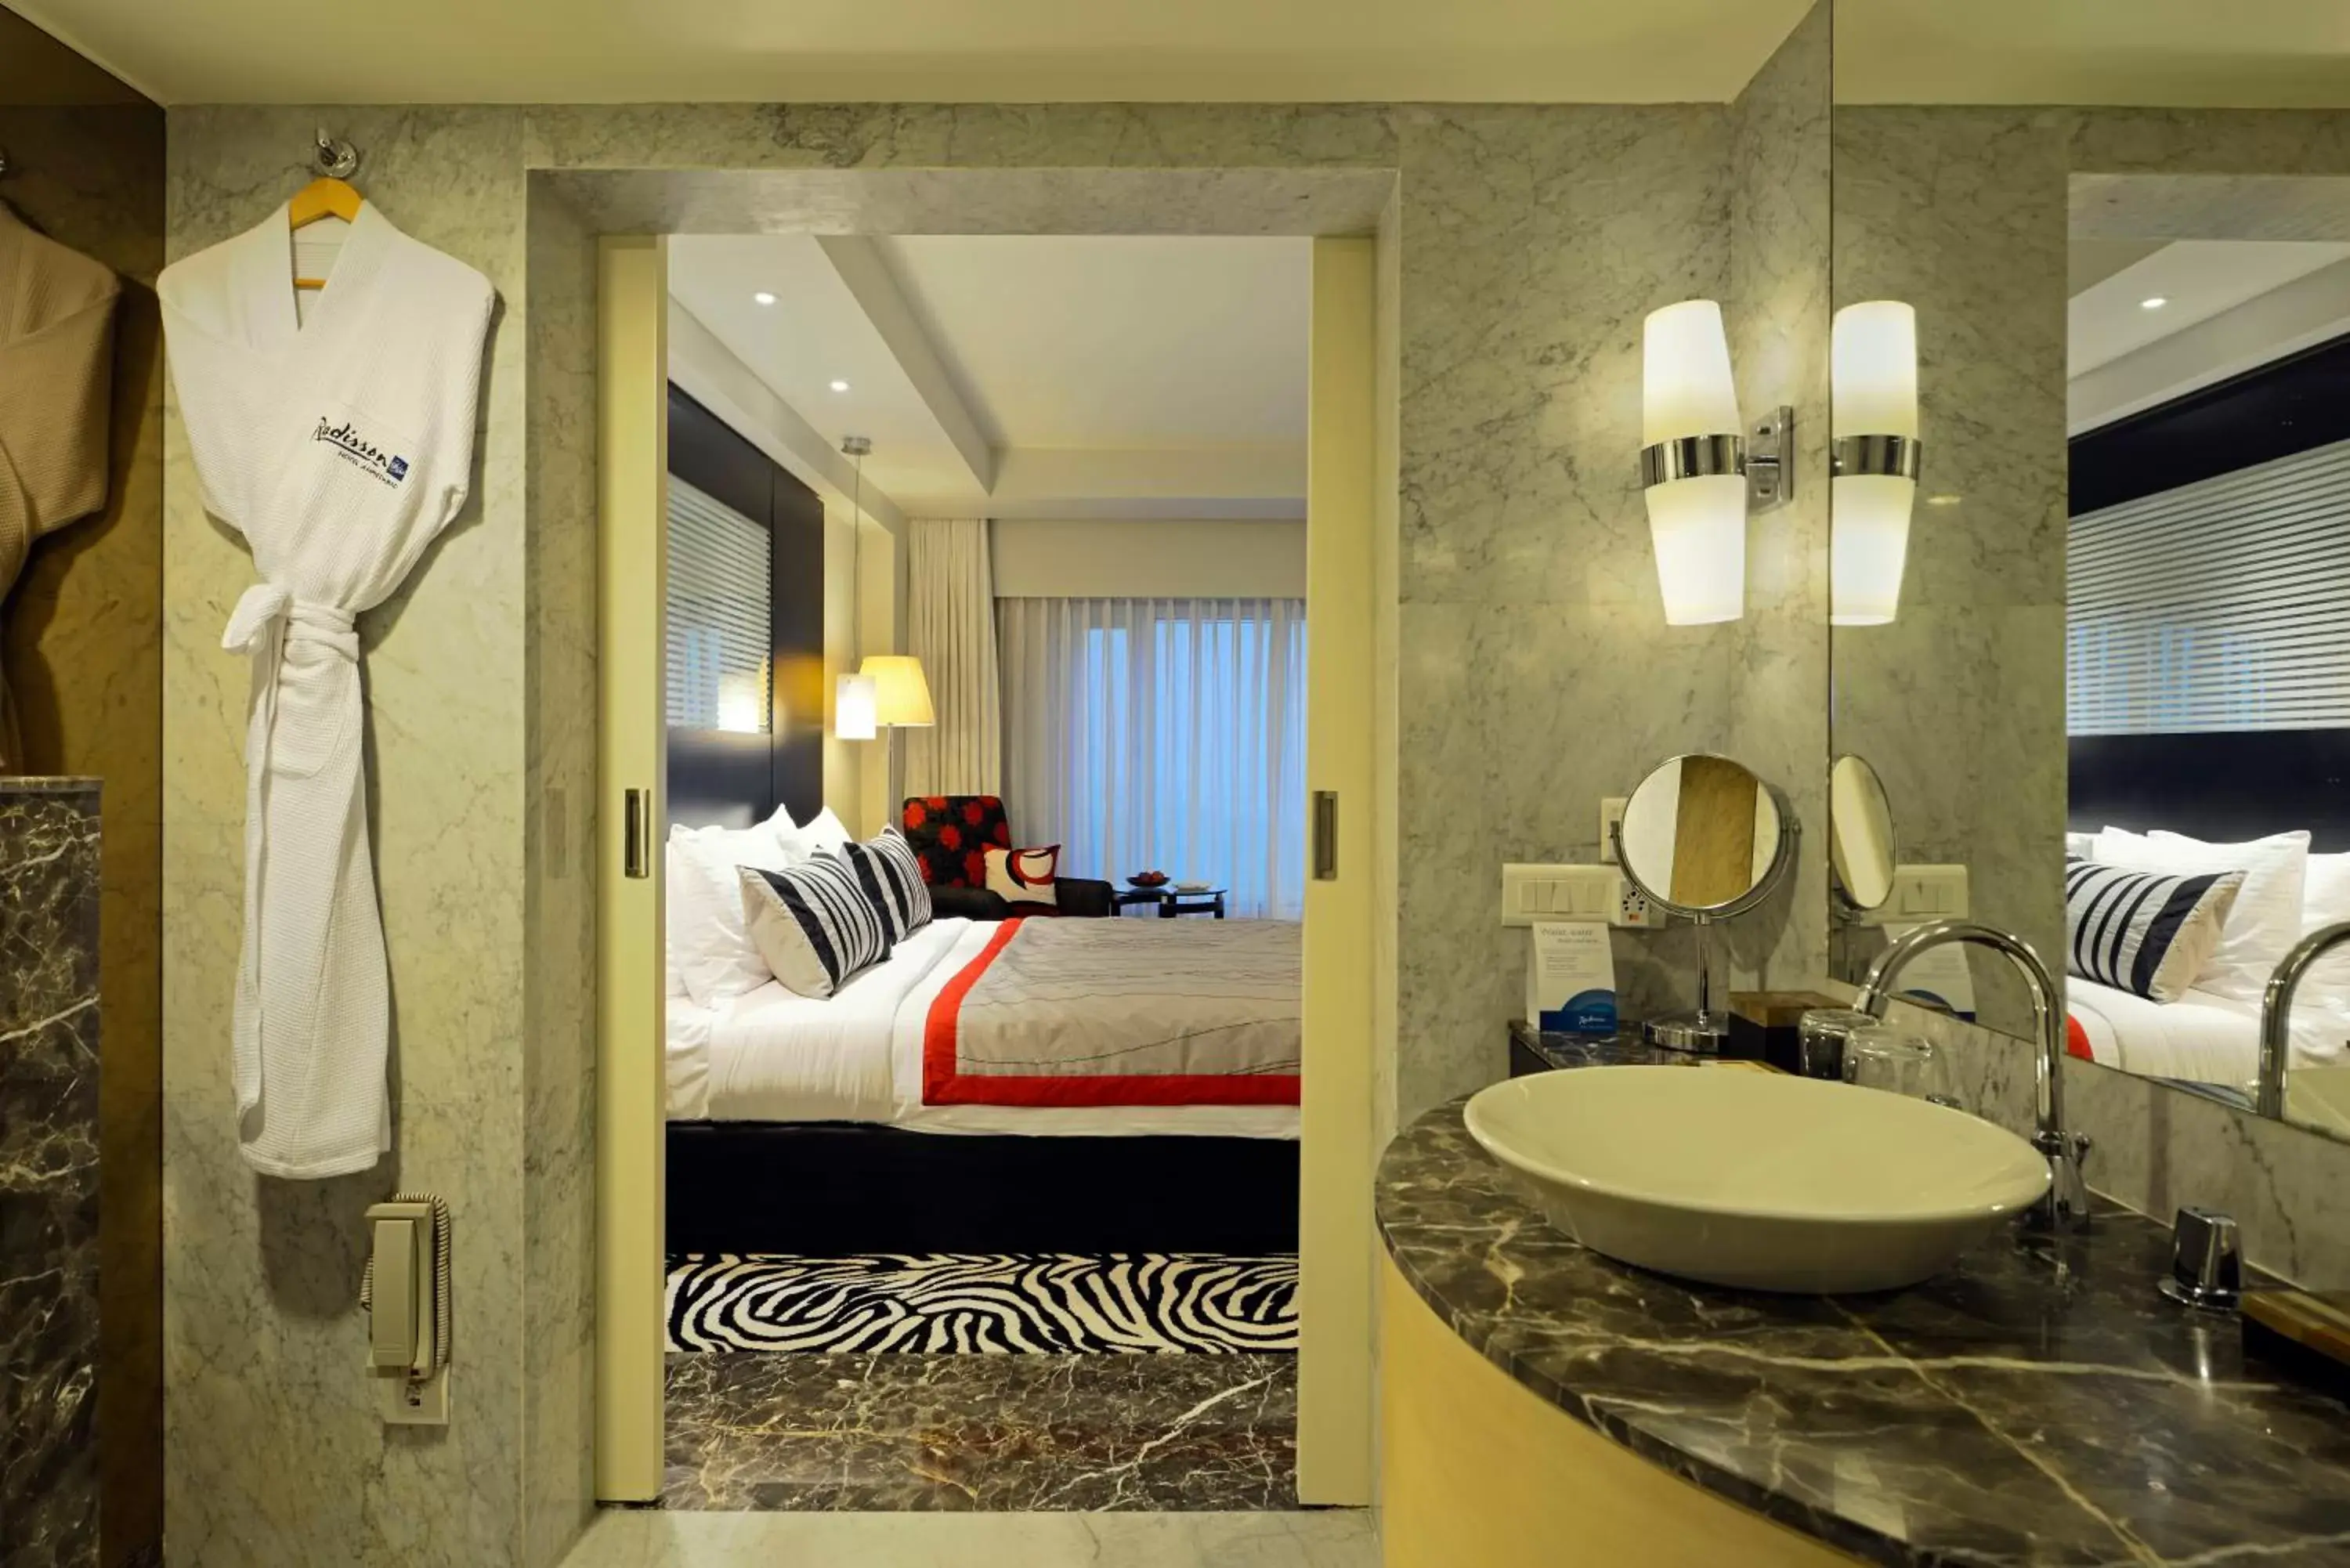 Photo of the whole room, Bathroom in Radisson Blu Hotel Ahmedabad